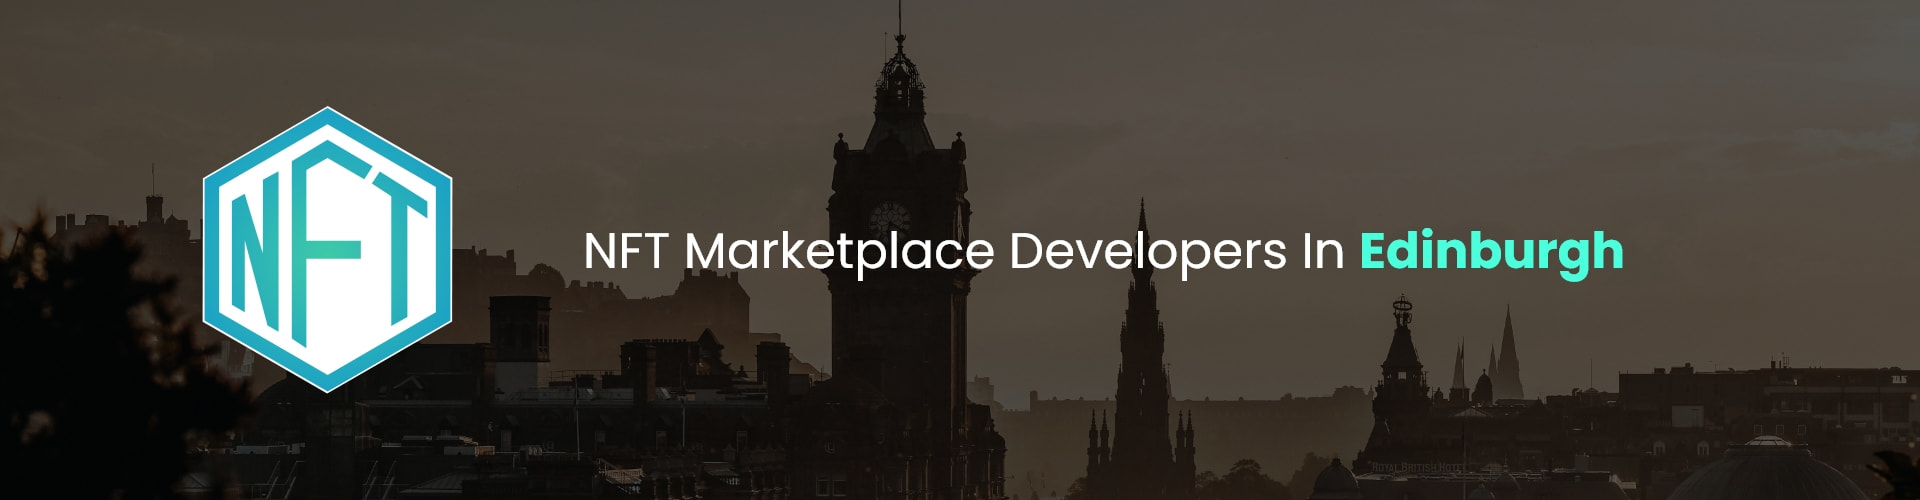 hire nft marketplace developers in edinburgh